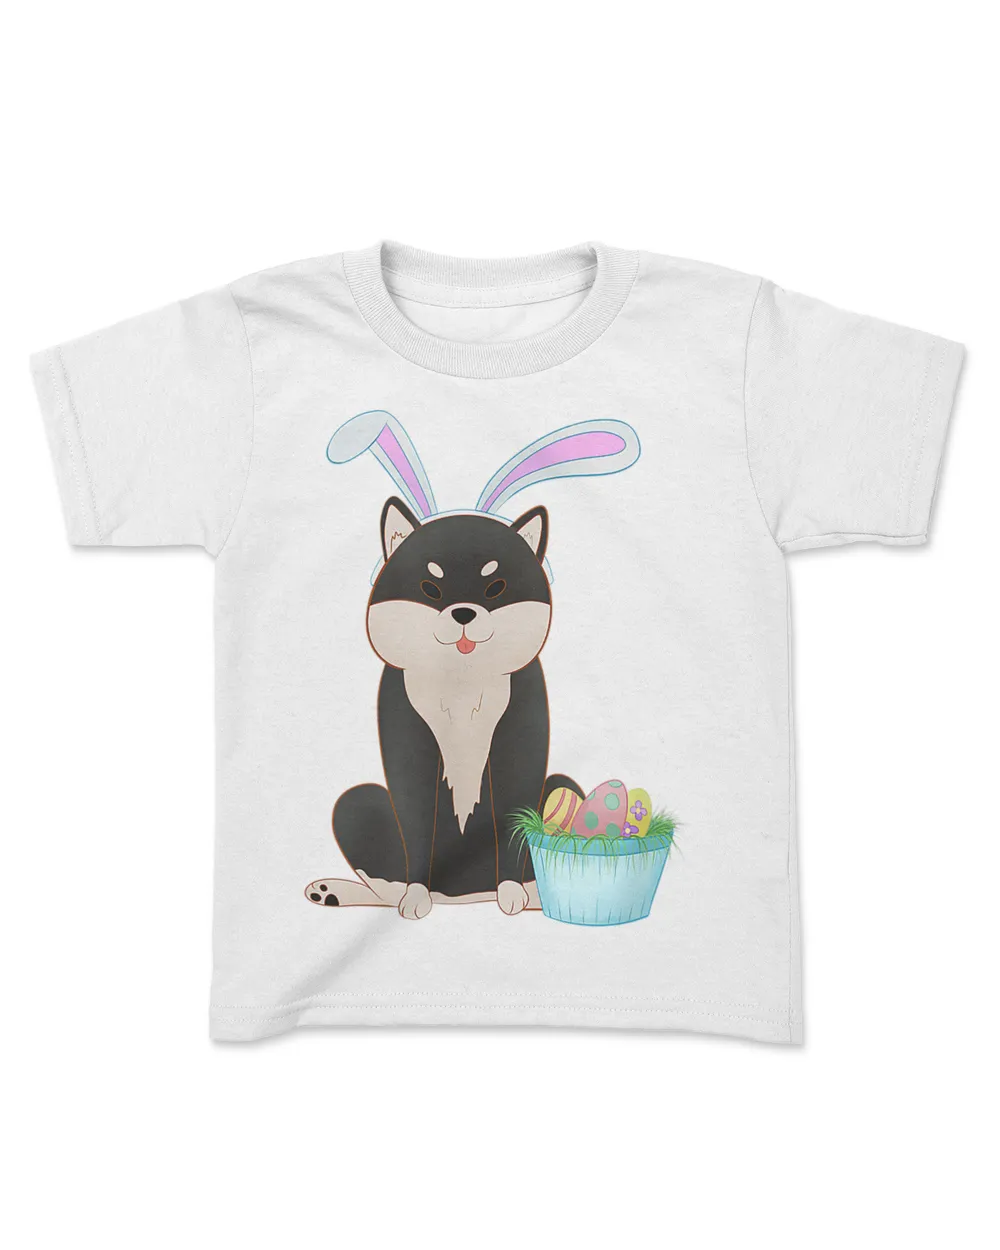 Cute Anime Shiba Inu with Bunny Ears and Easter Egg Basket T-Shirt hoodie shirt